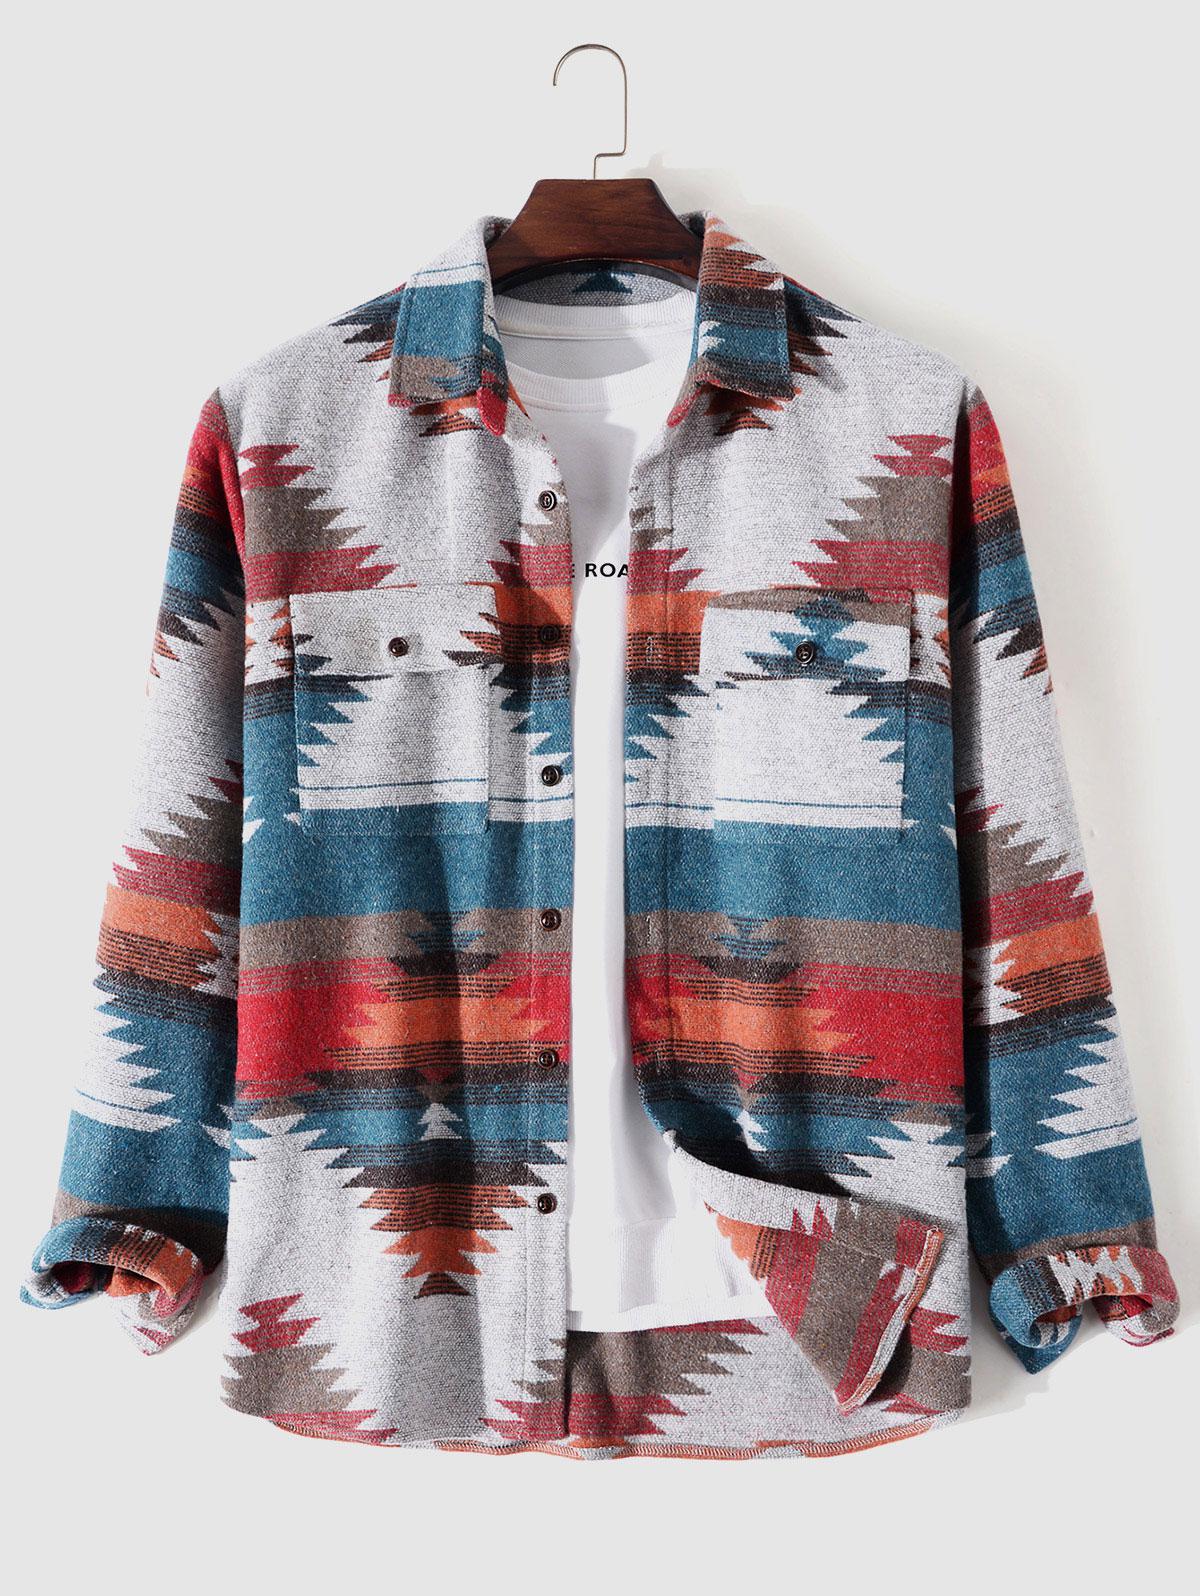 ZAFUL Men's Tribal Geometric Ethnic Aztec Printed Blend Wool Jacket Xl Gray